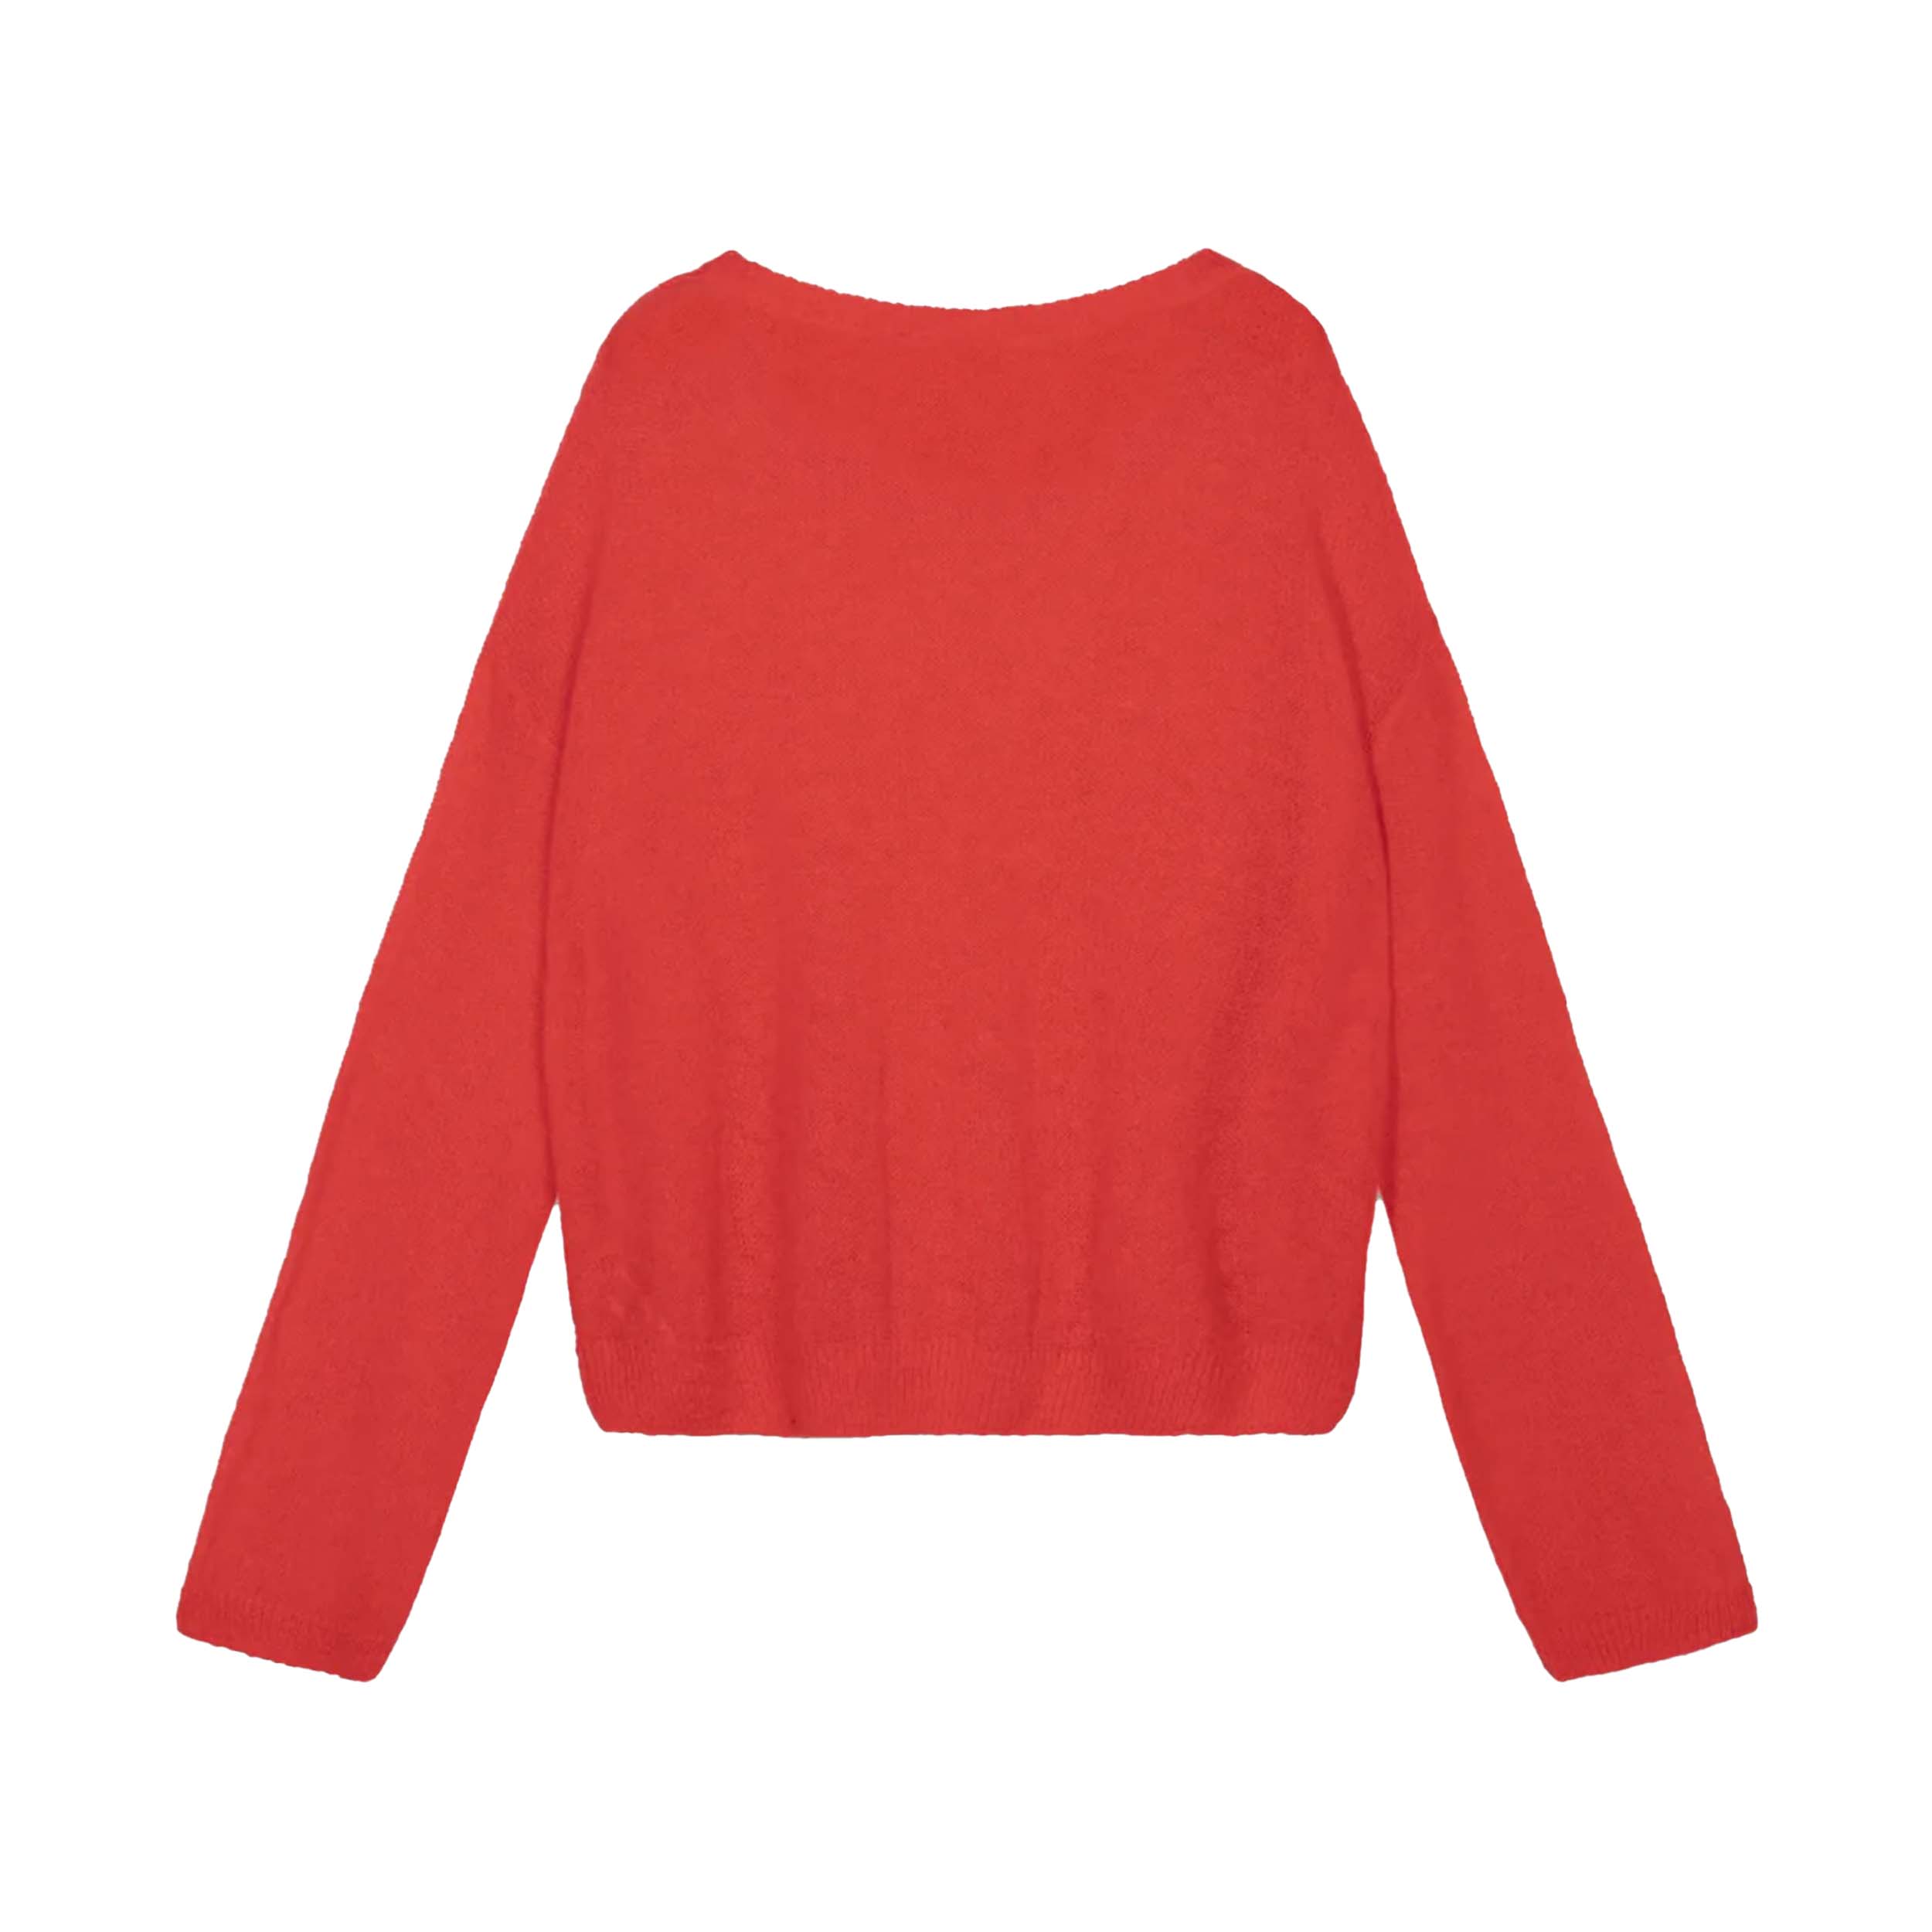 10DAYS 20-618-4202 Sweater Thin Knit Poppy Red